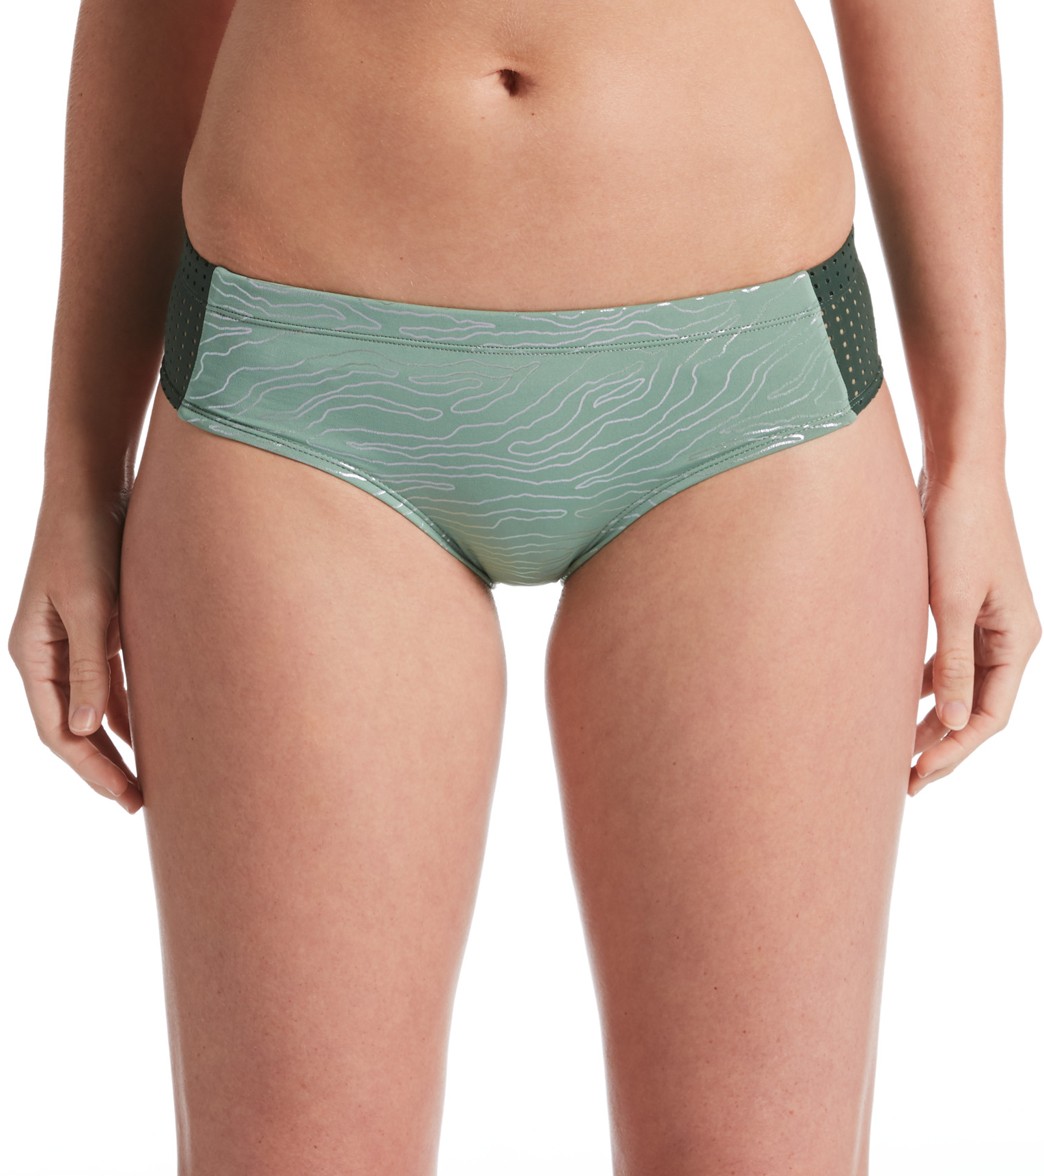 Nike Geo Onyx Hipster Bikini Bottom - Silver Pine Small - Swimoutlet.com